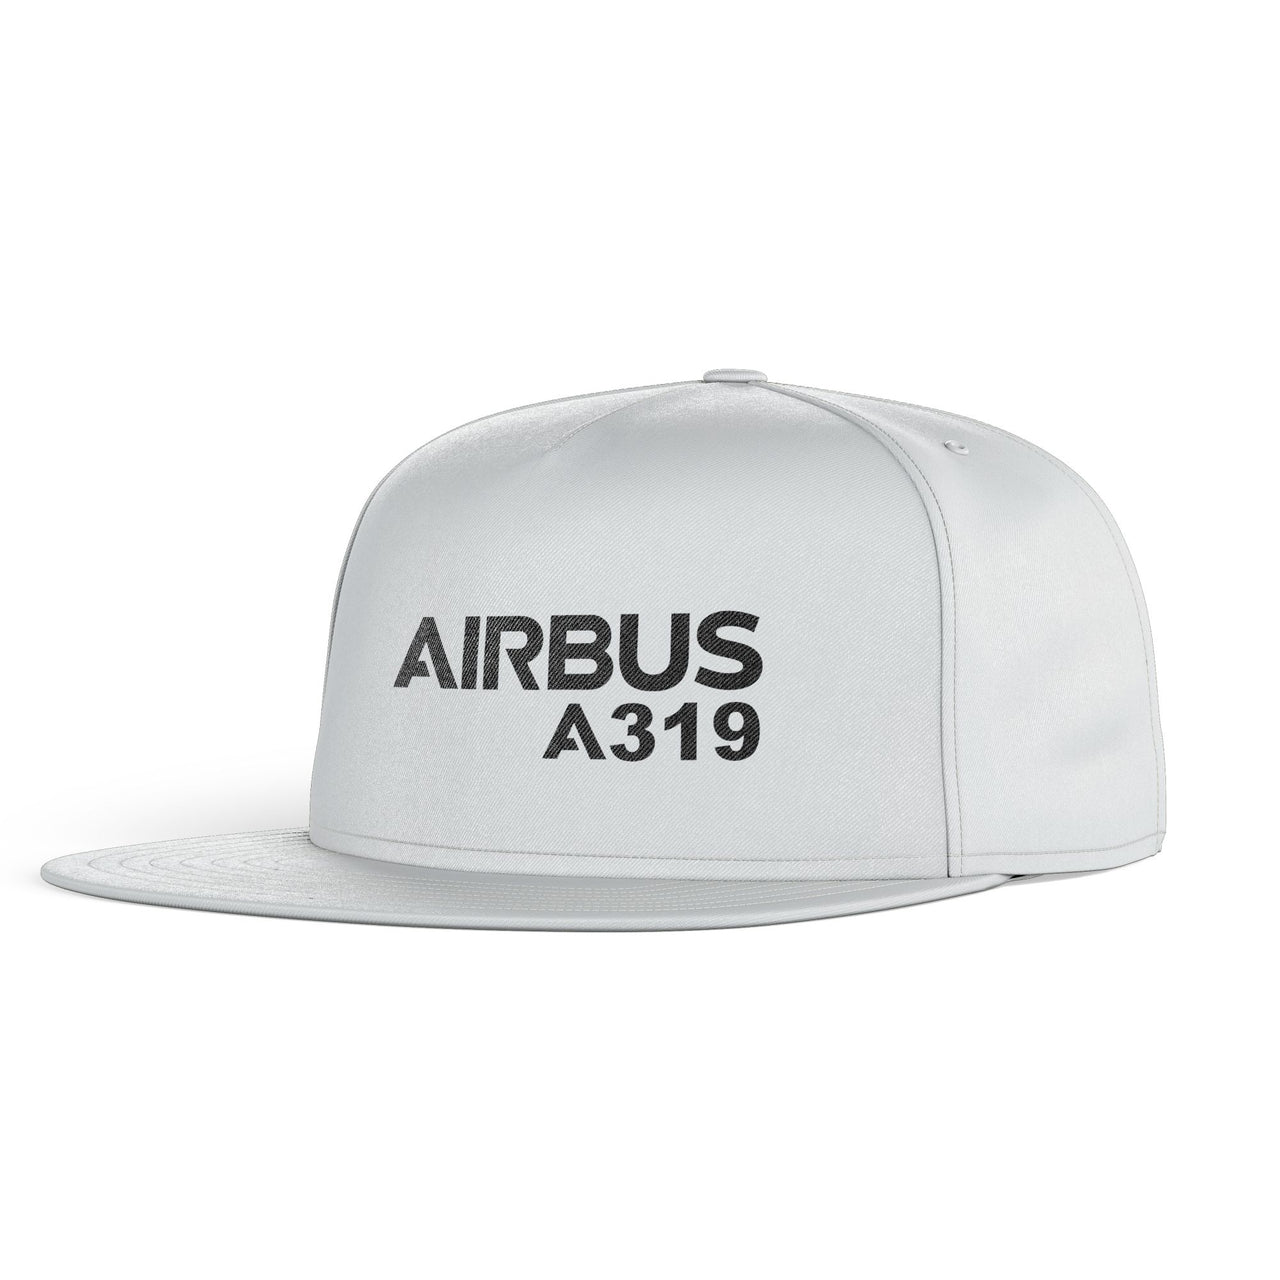 Airbus A319 & Text Designed Snapback Caps & Hats